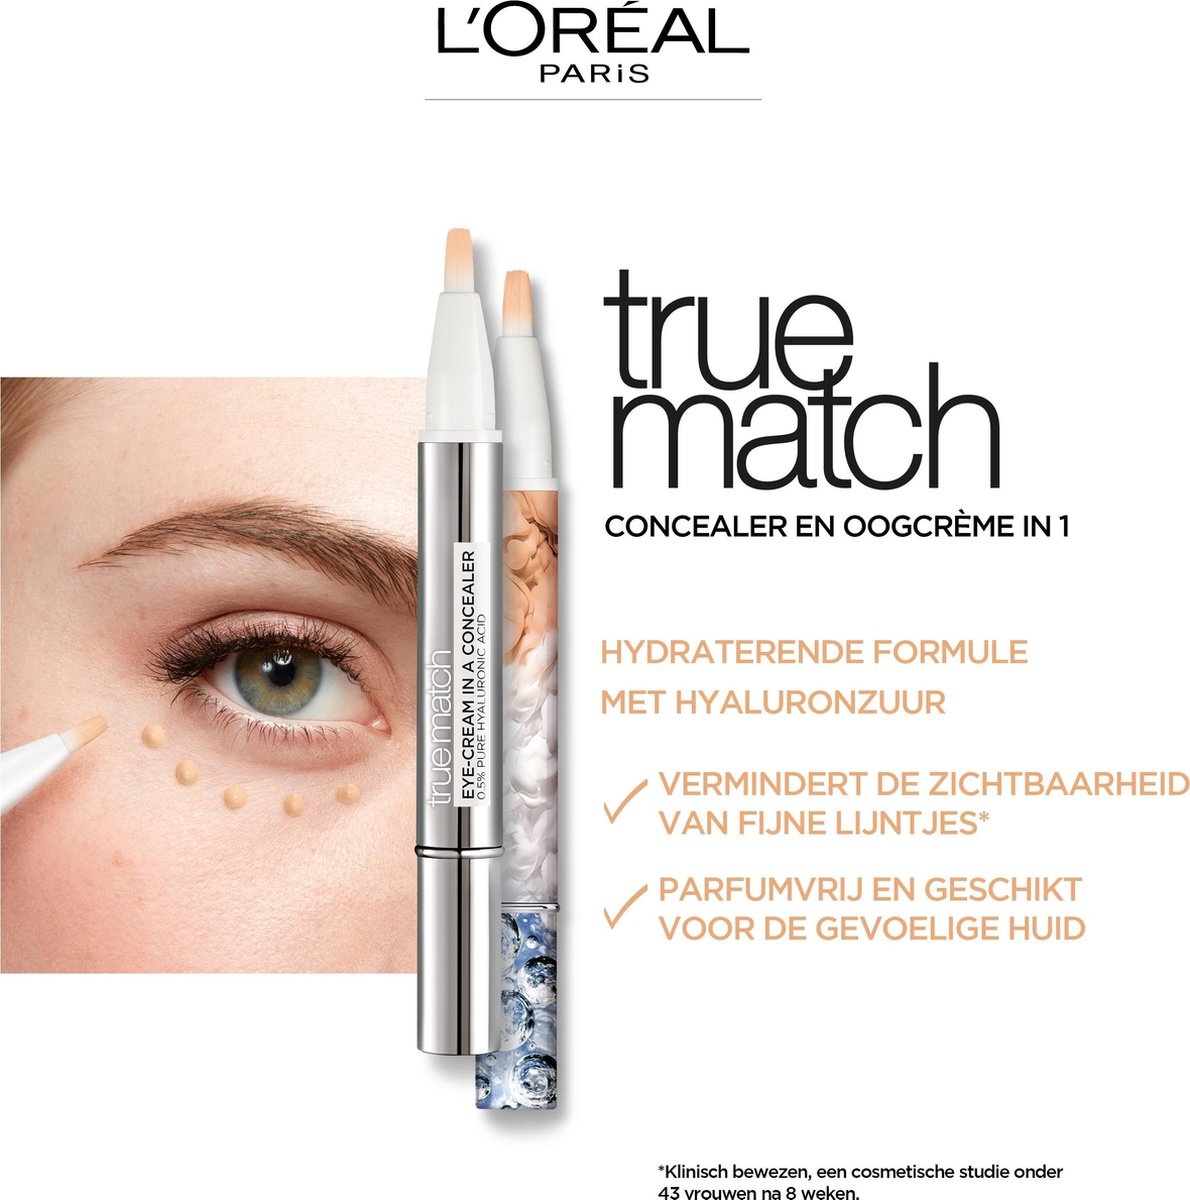 L'Oréal Paris True Match Touche Magique Concealer - N3-5 Natural Beige - Concealer and Eye Cream in 1, Enriched with 0.5% Hyaluronic Acid